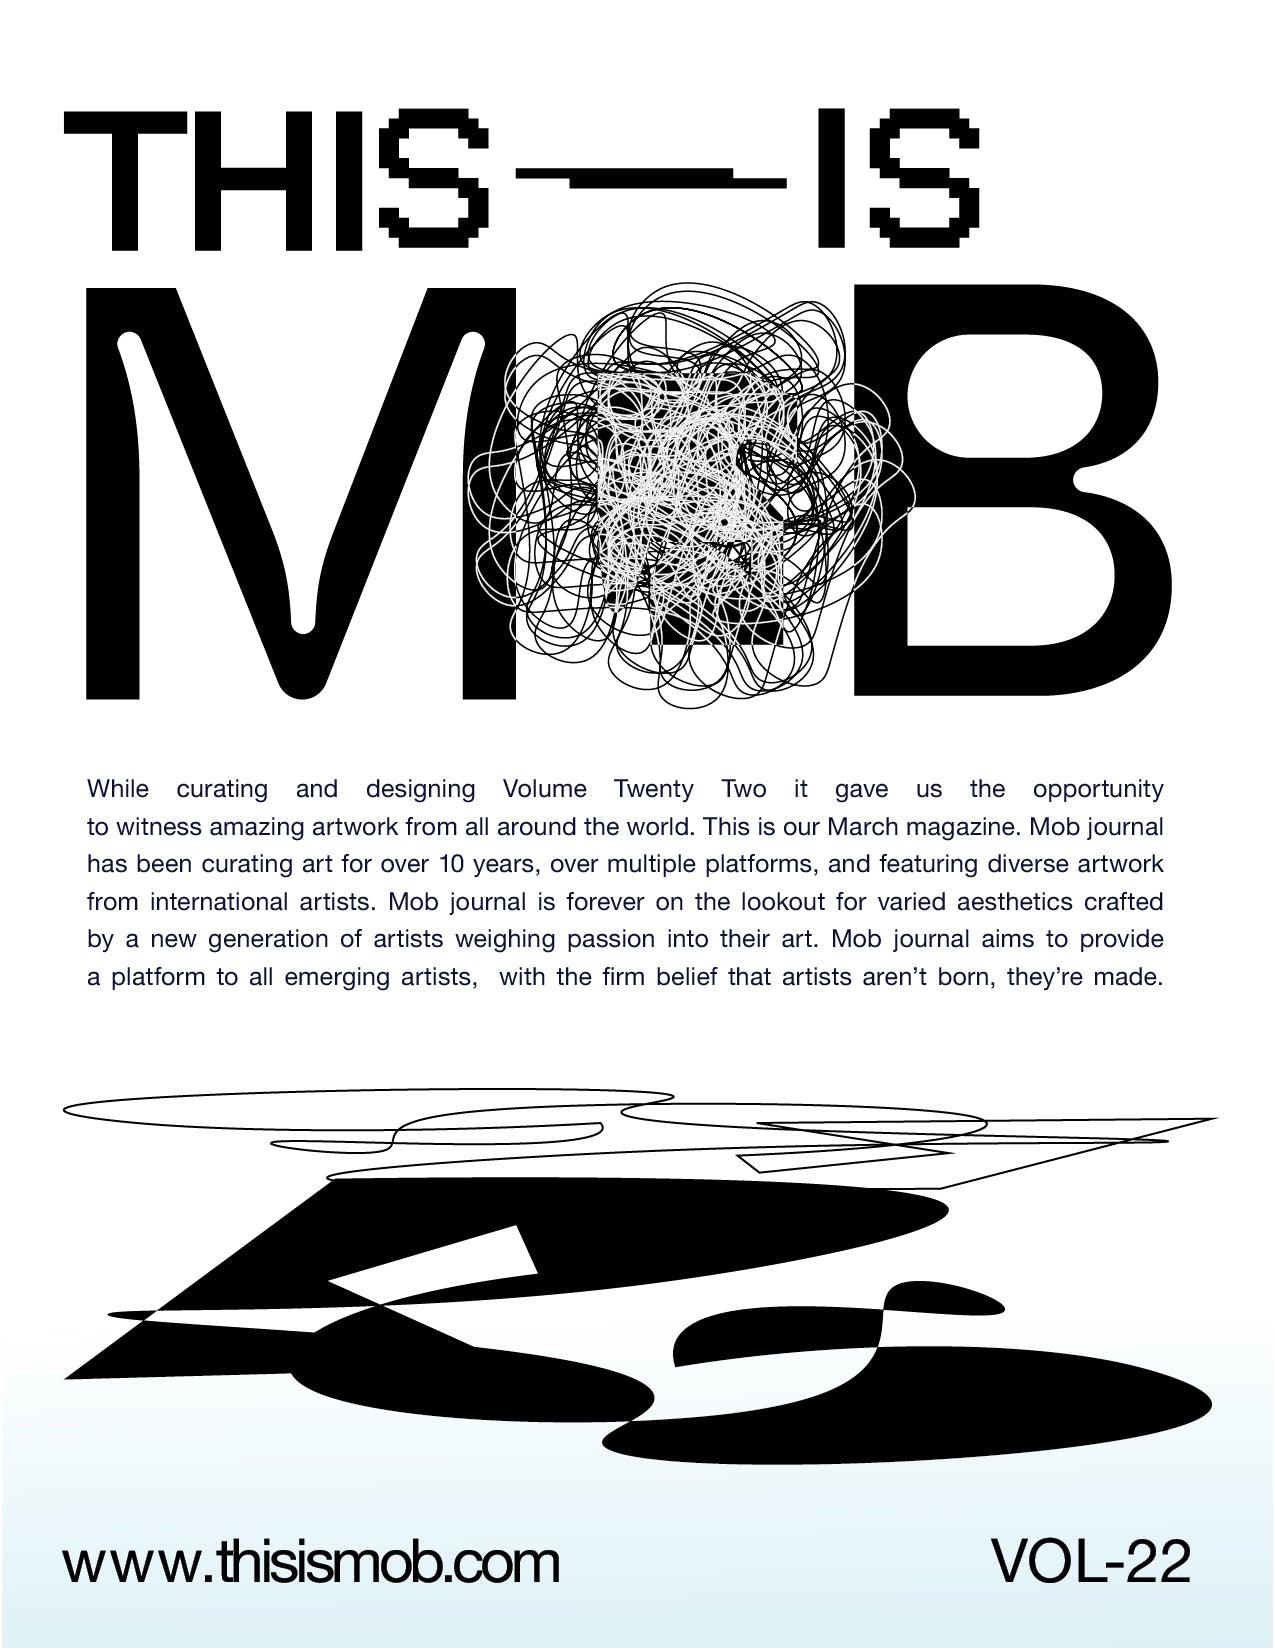 MOB JOURNAL | VOLUME TWENTY TWO | ISSUE #54 - Mob Journal